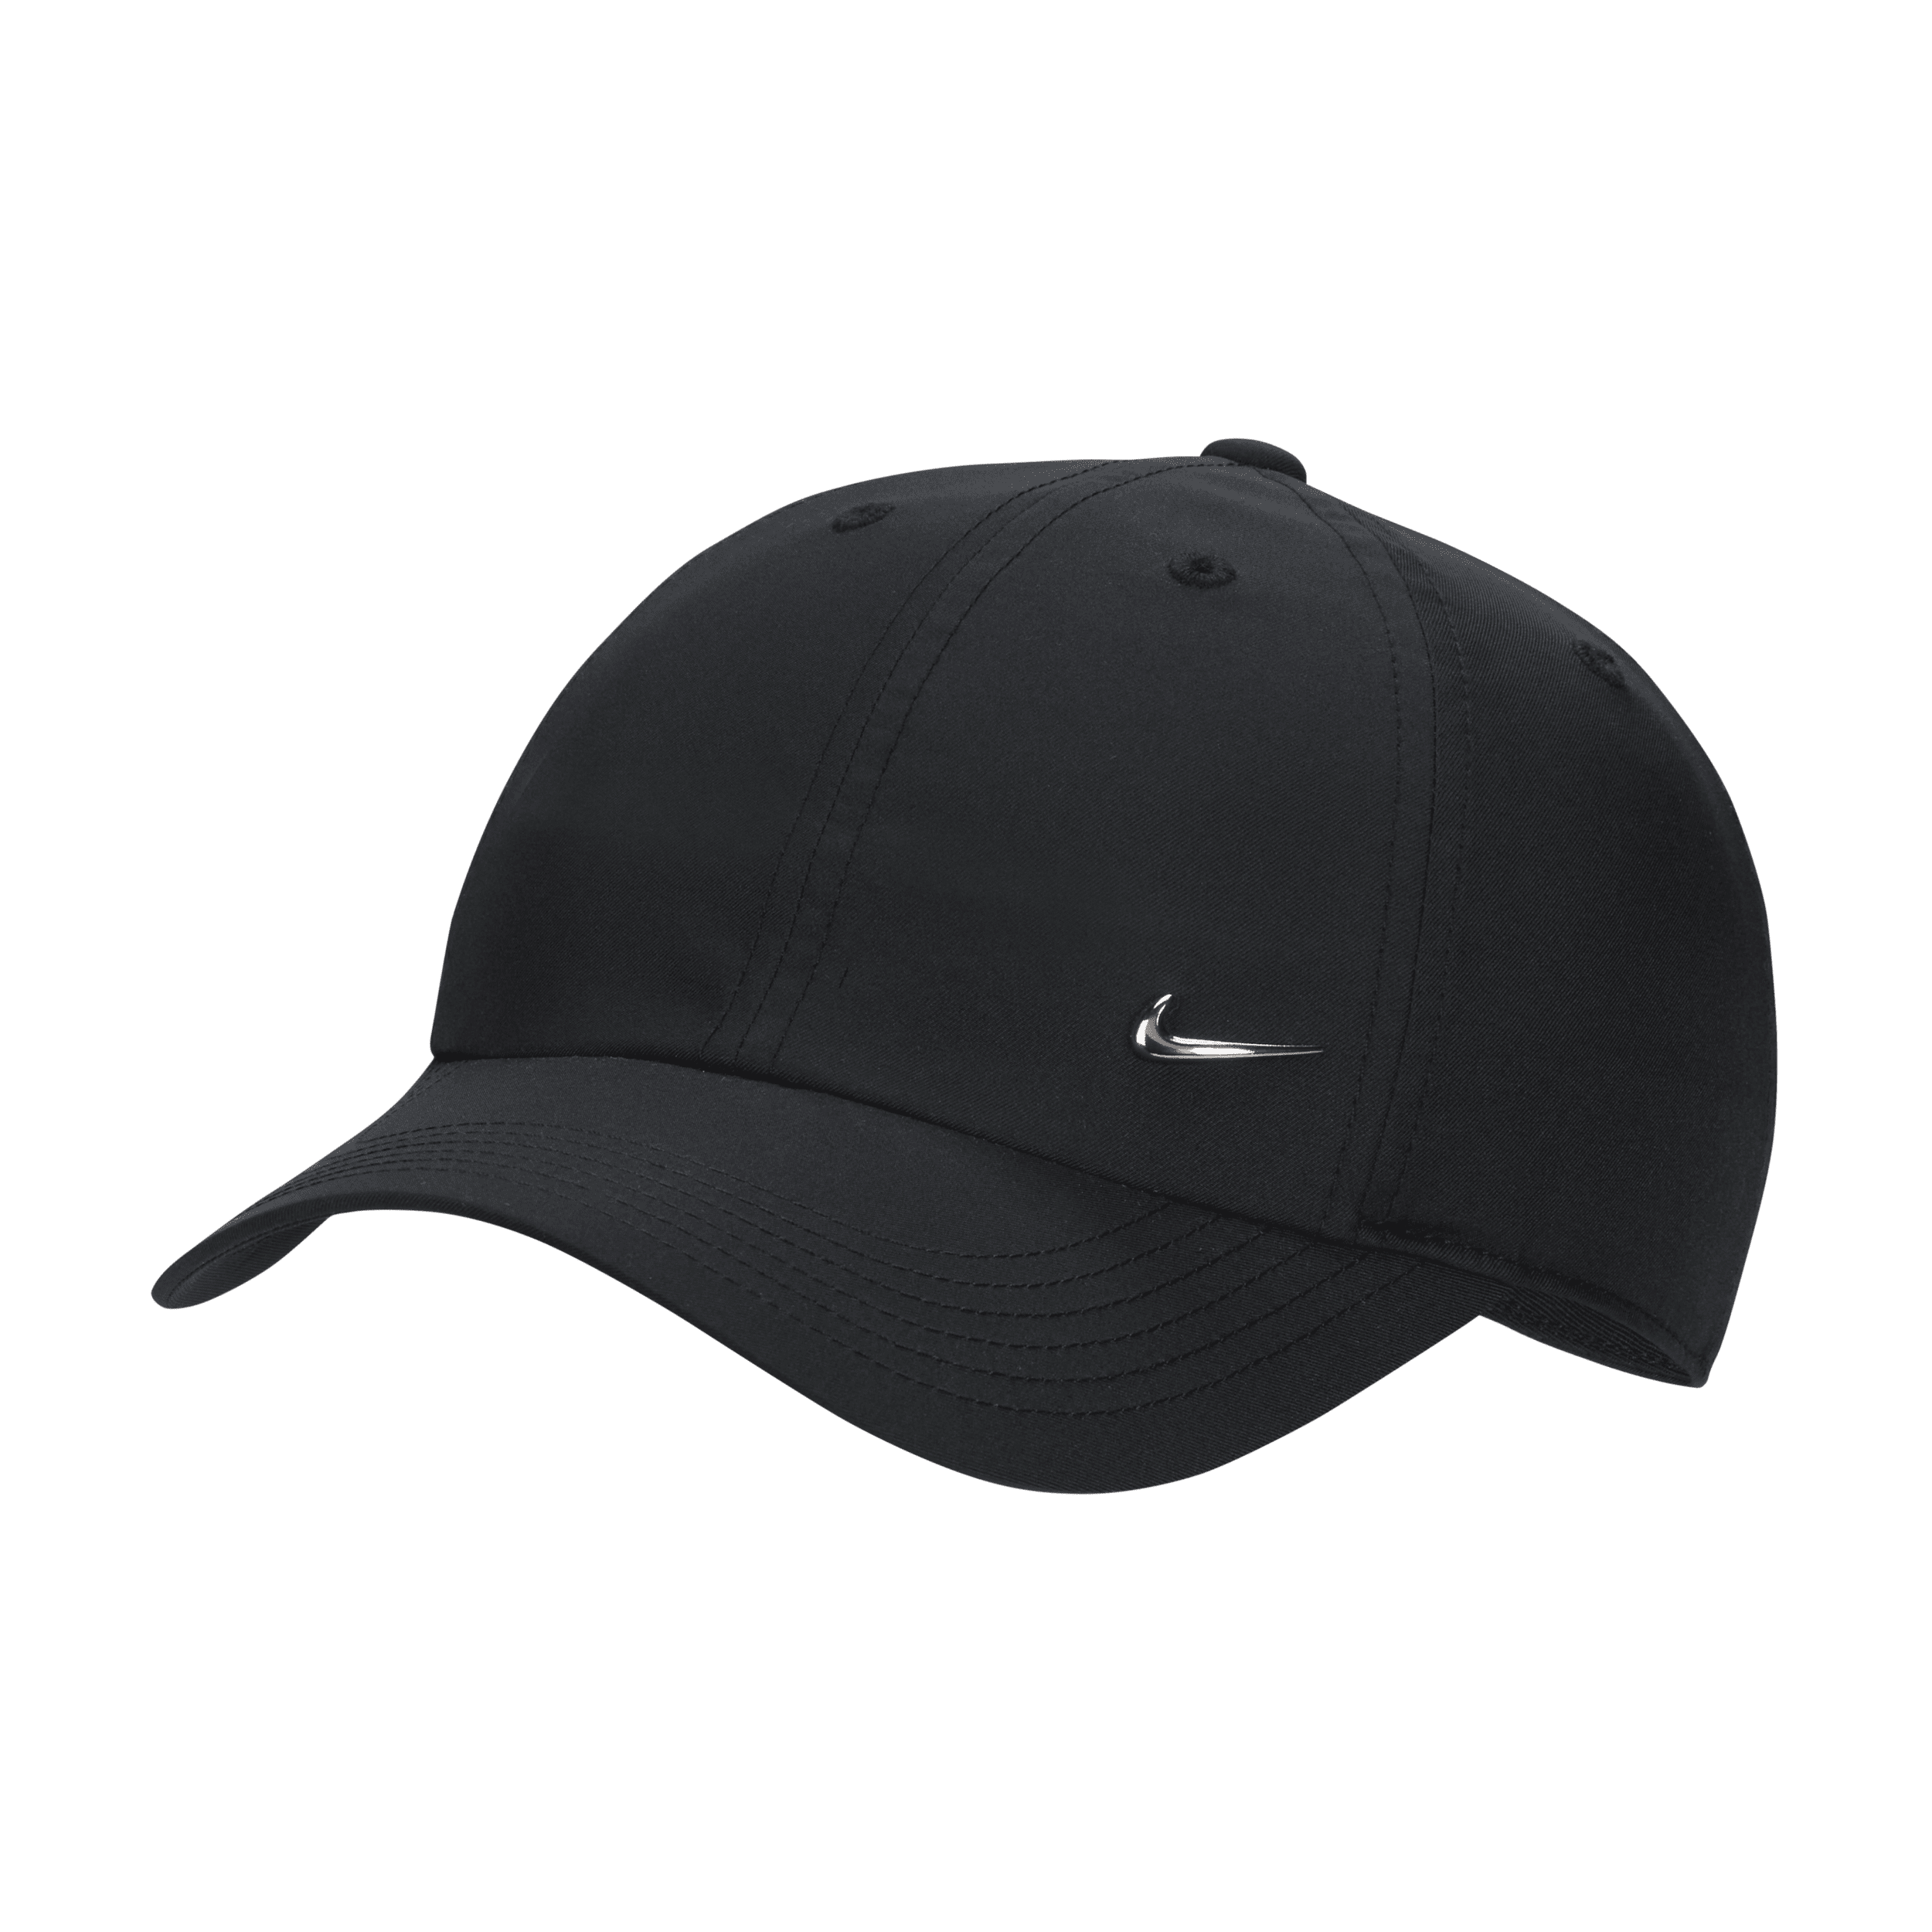 Nike Dri-FIT Club Gorra sin estructura con logotipo Swoosh metálico - Niño/a - Negro